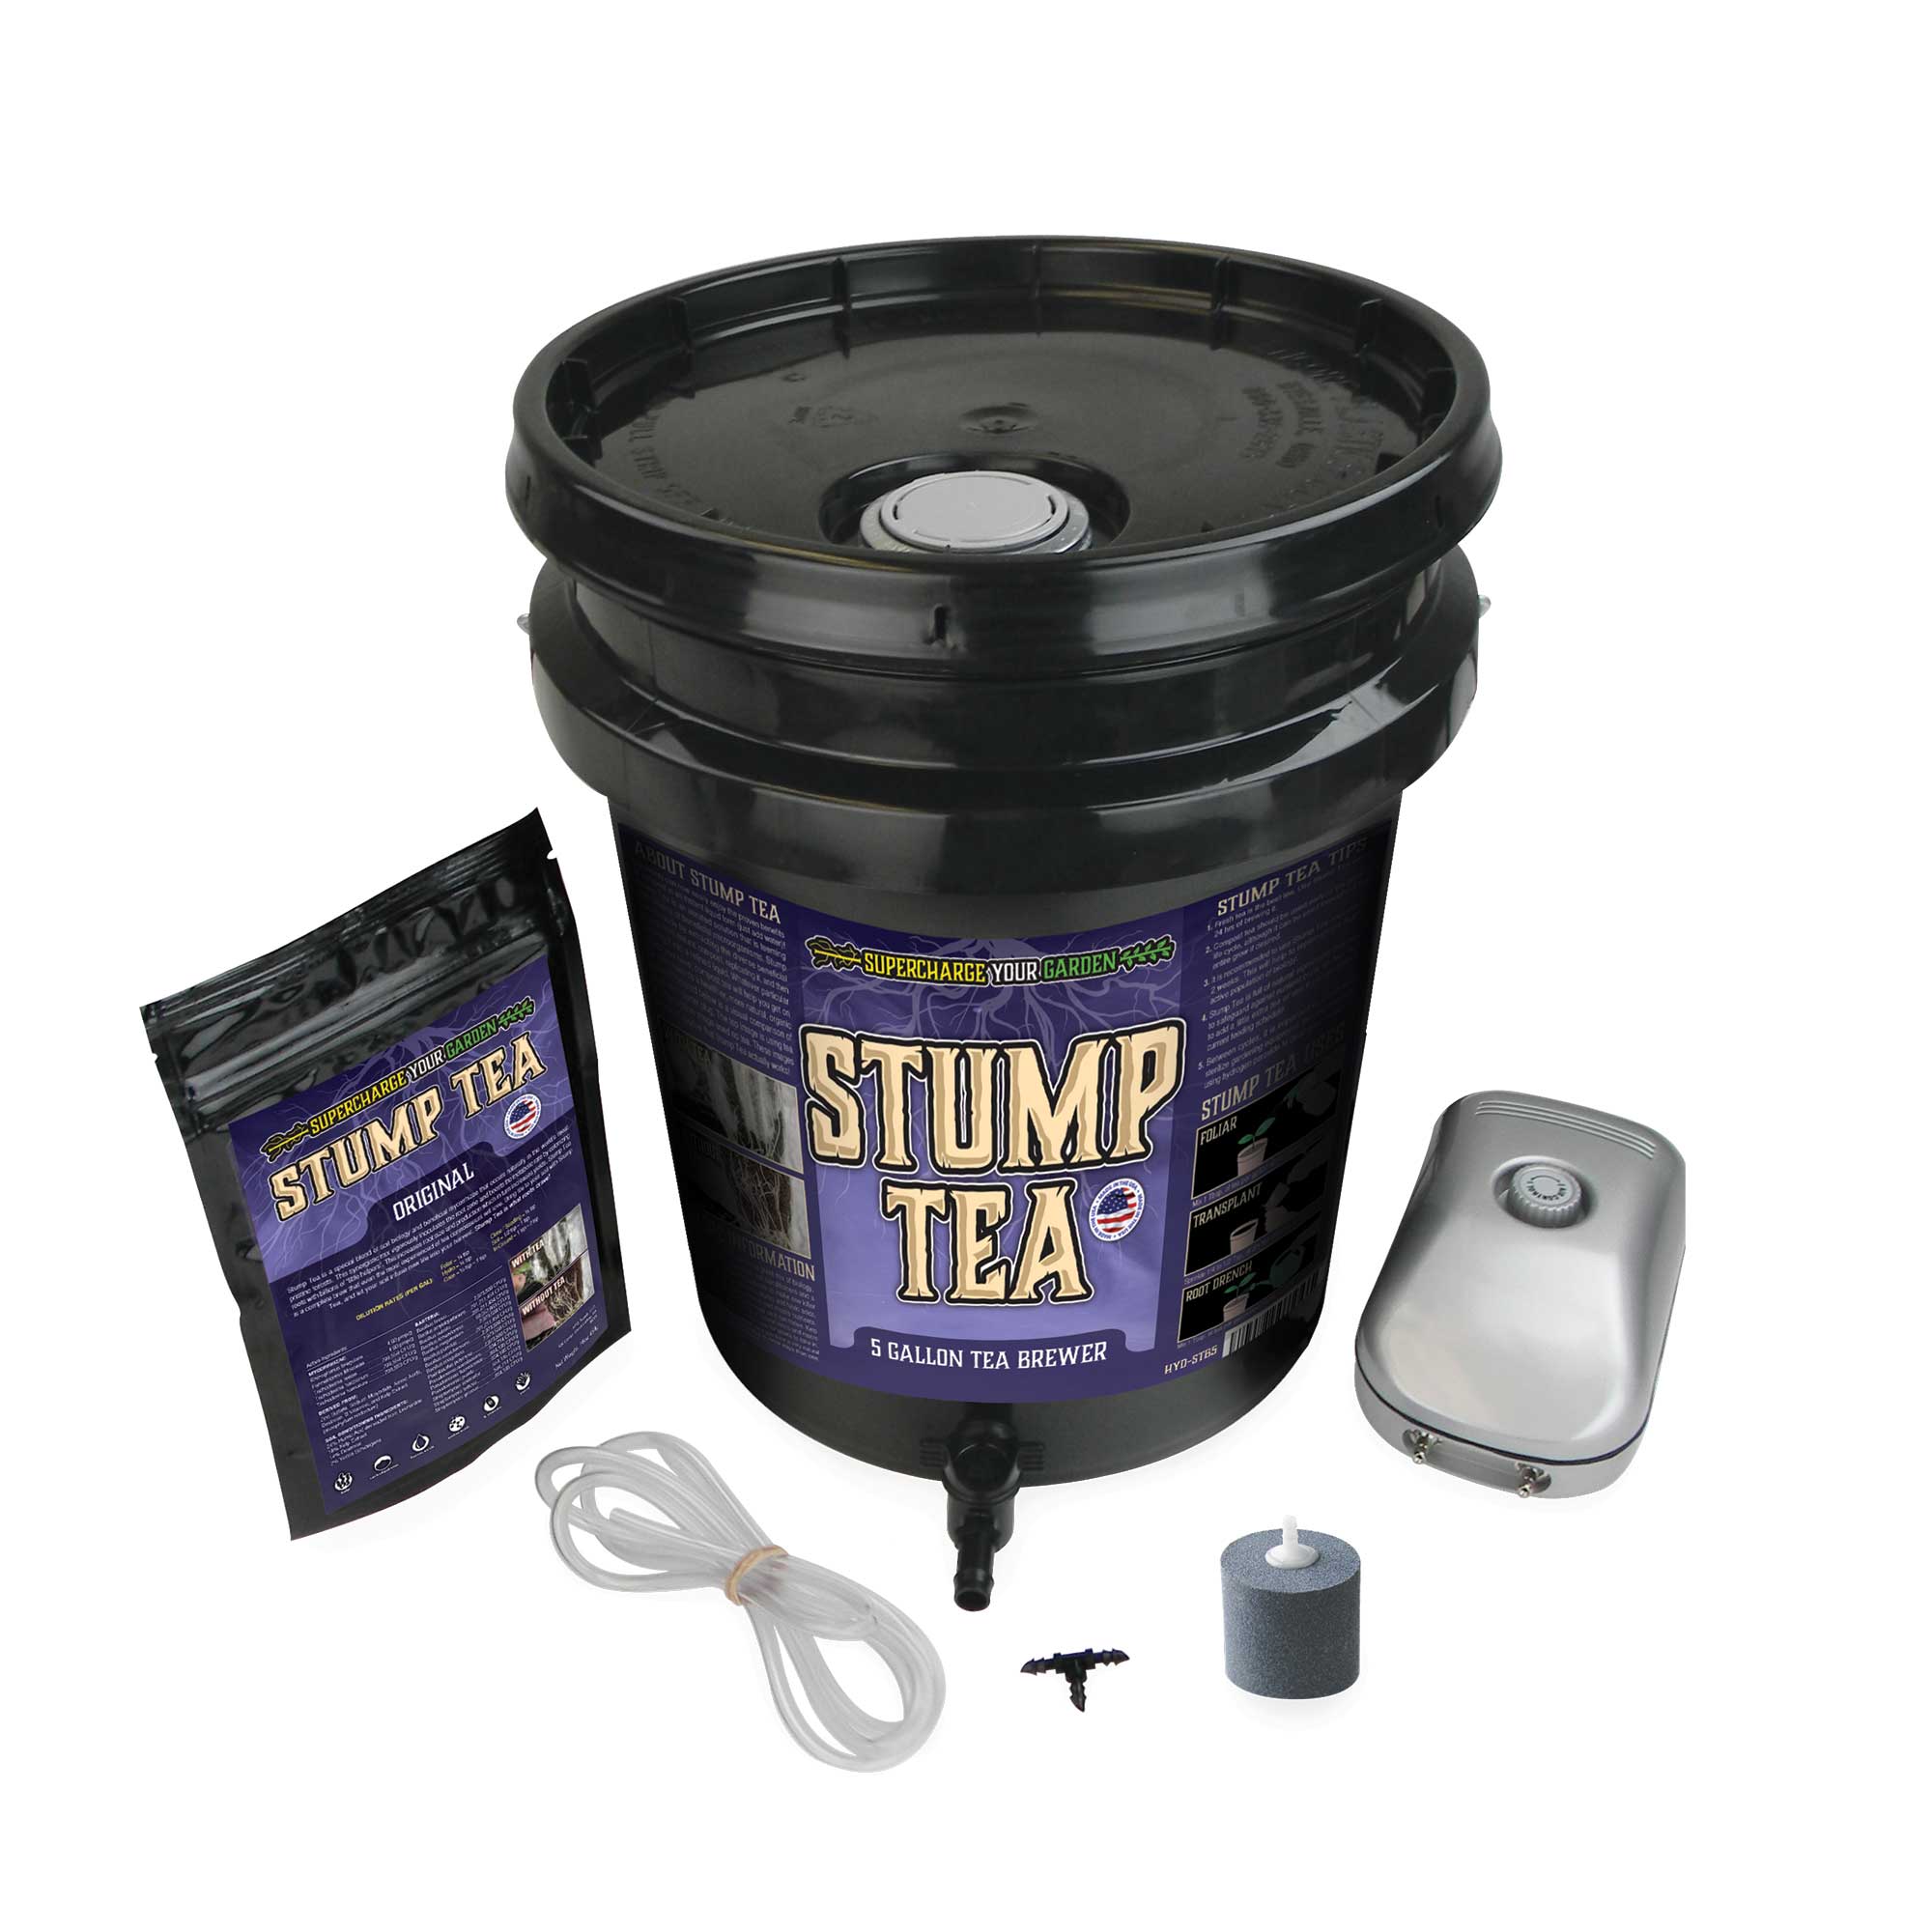 5 Gallon Stump Tea Brewer